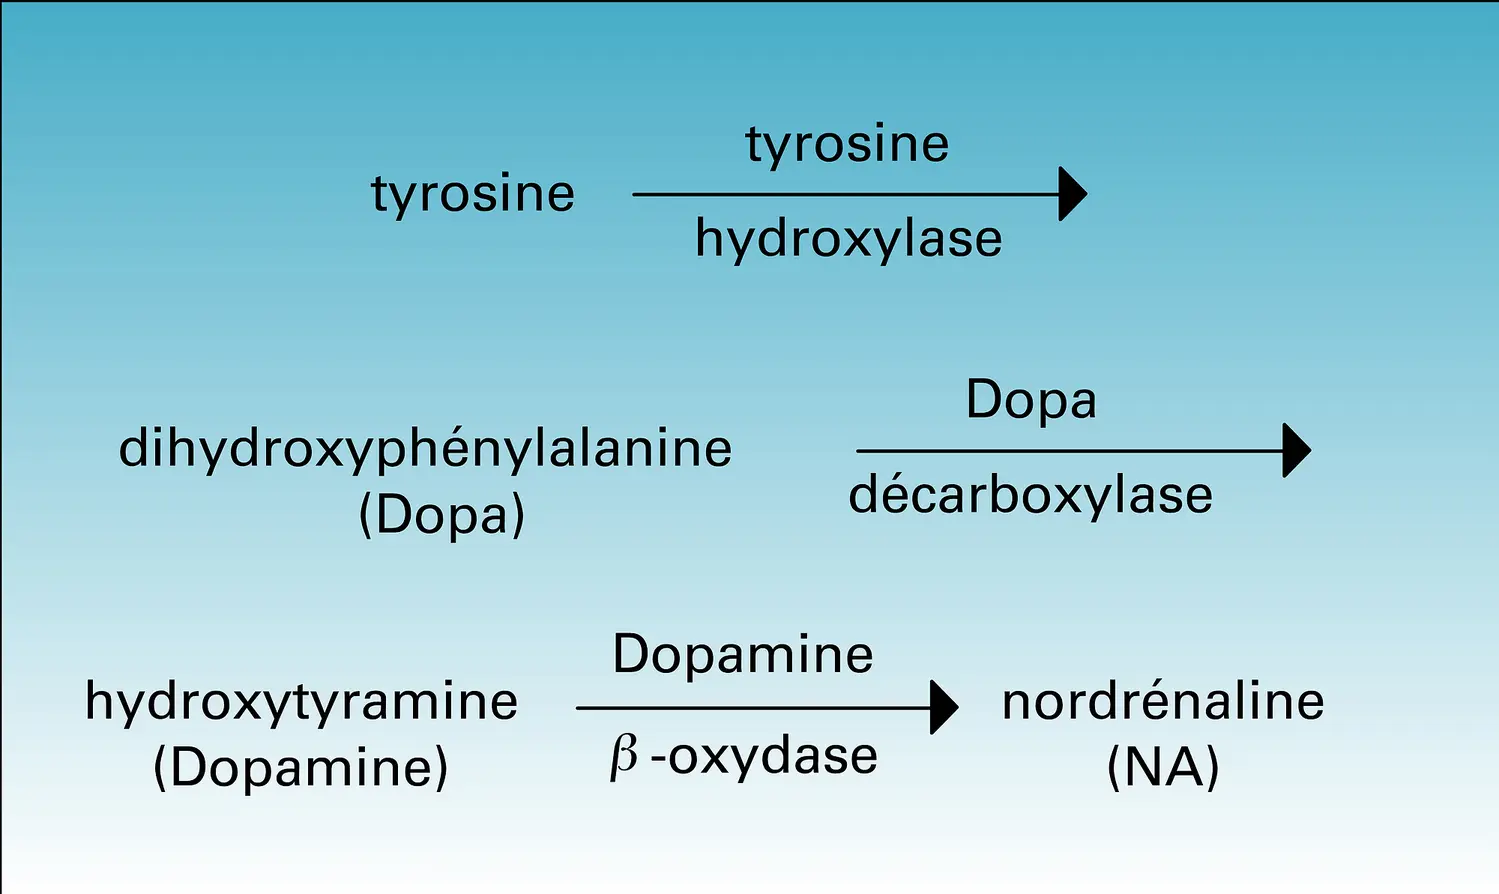 Tyrosine : synthèse de la noradrénaline